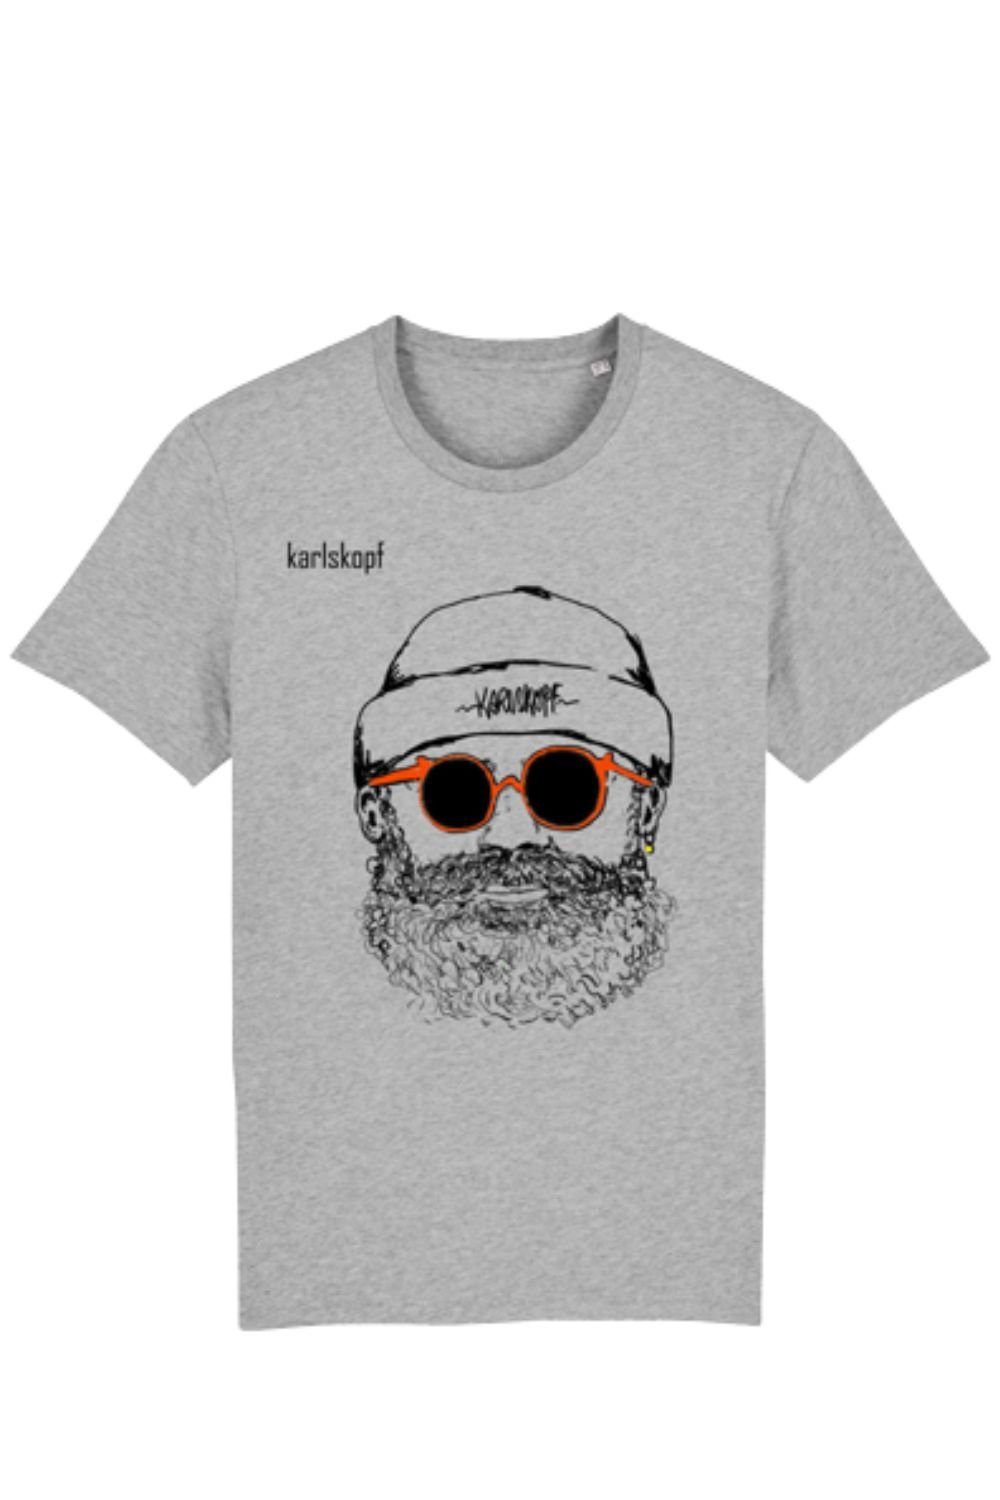 karlskopf Print-Shirt Rundhalsshirt Basic HIPSTER Grau